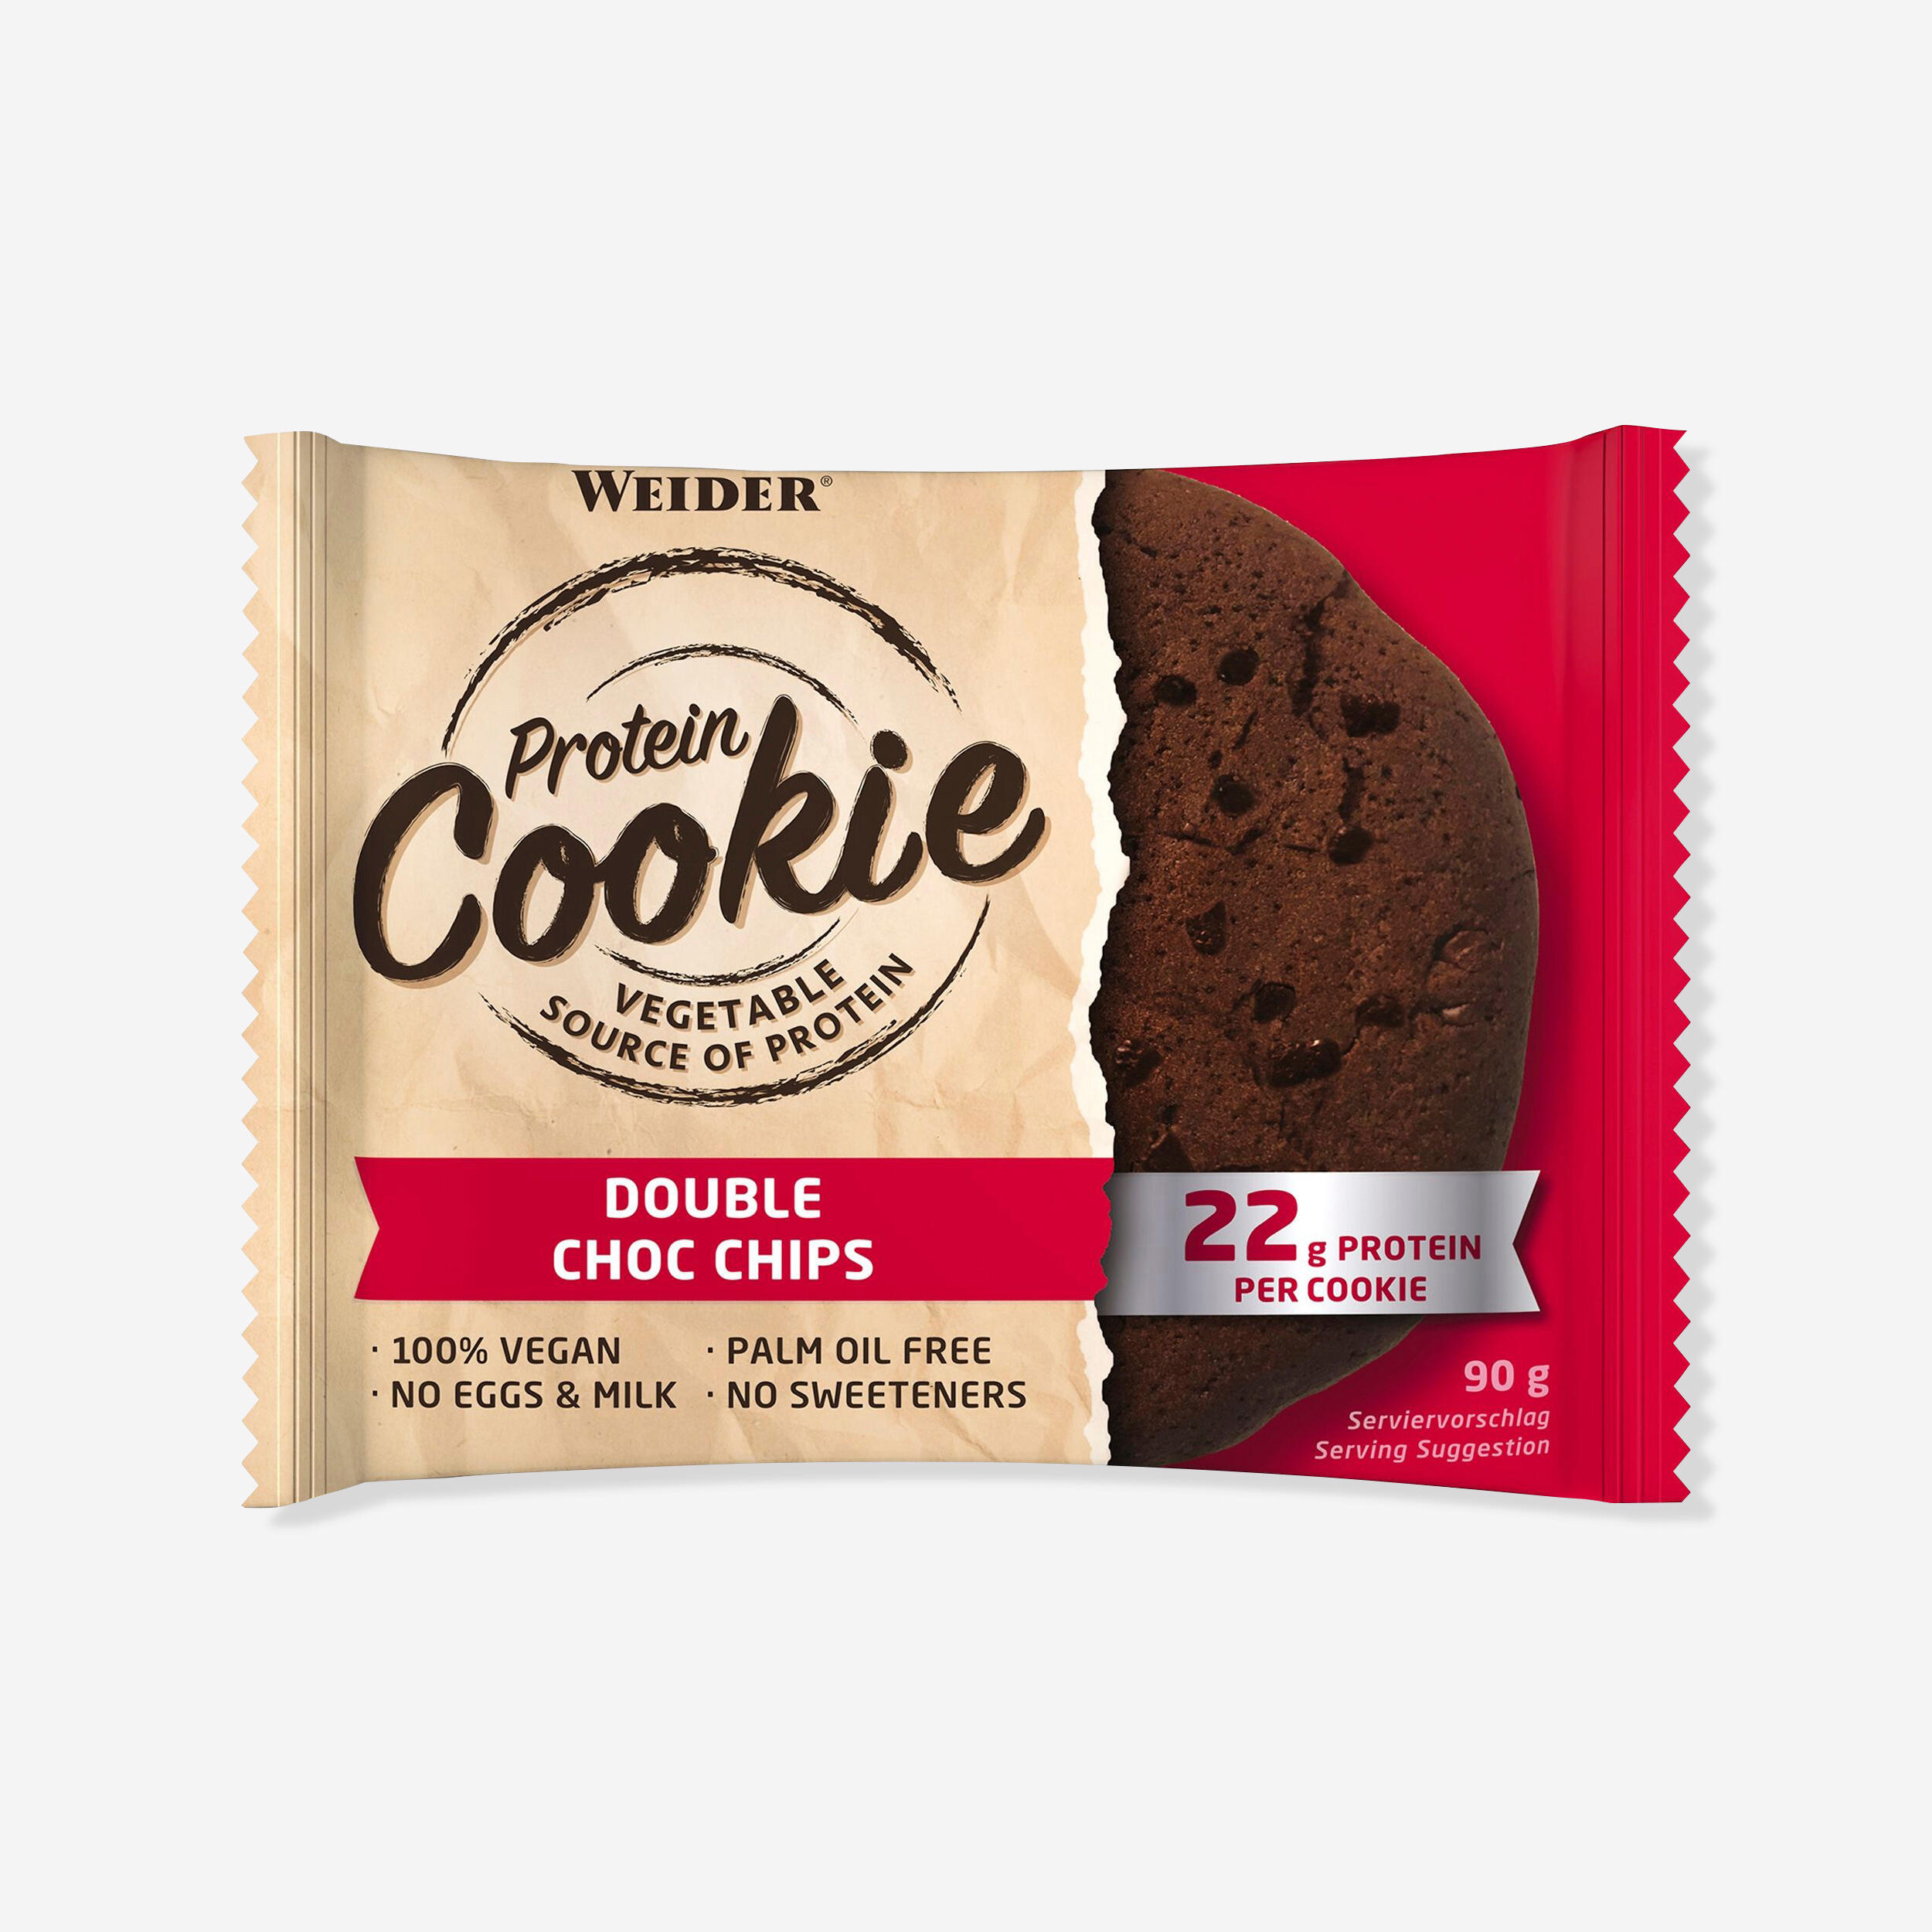 Biscuite proteic Cookie double choc chips 100% vegan 90 g WEIDER 100